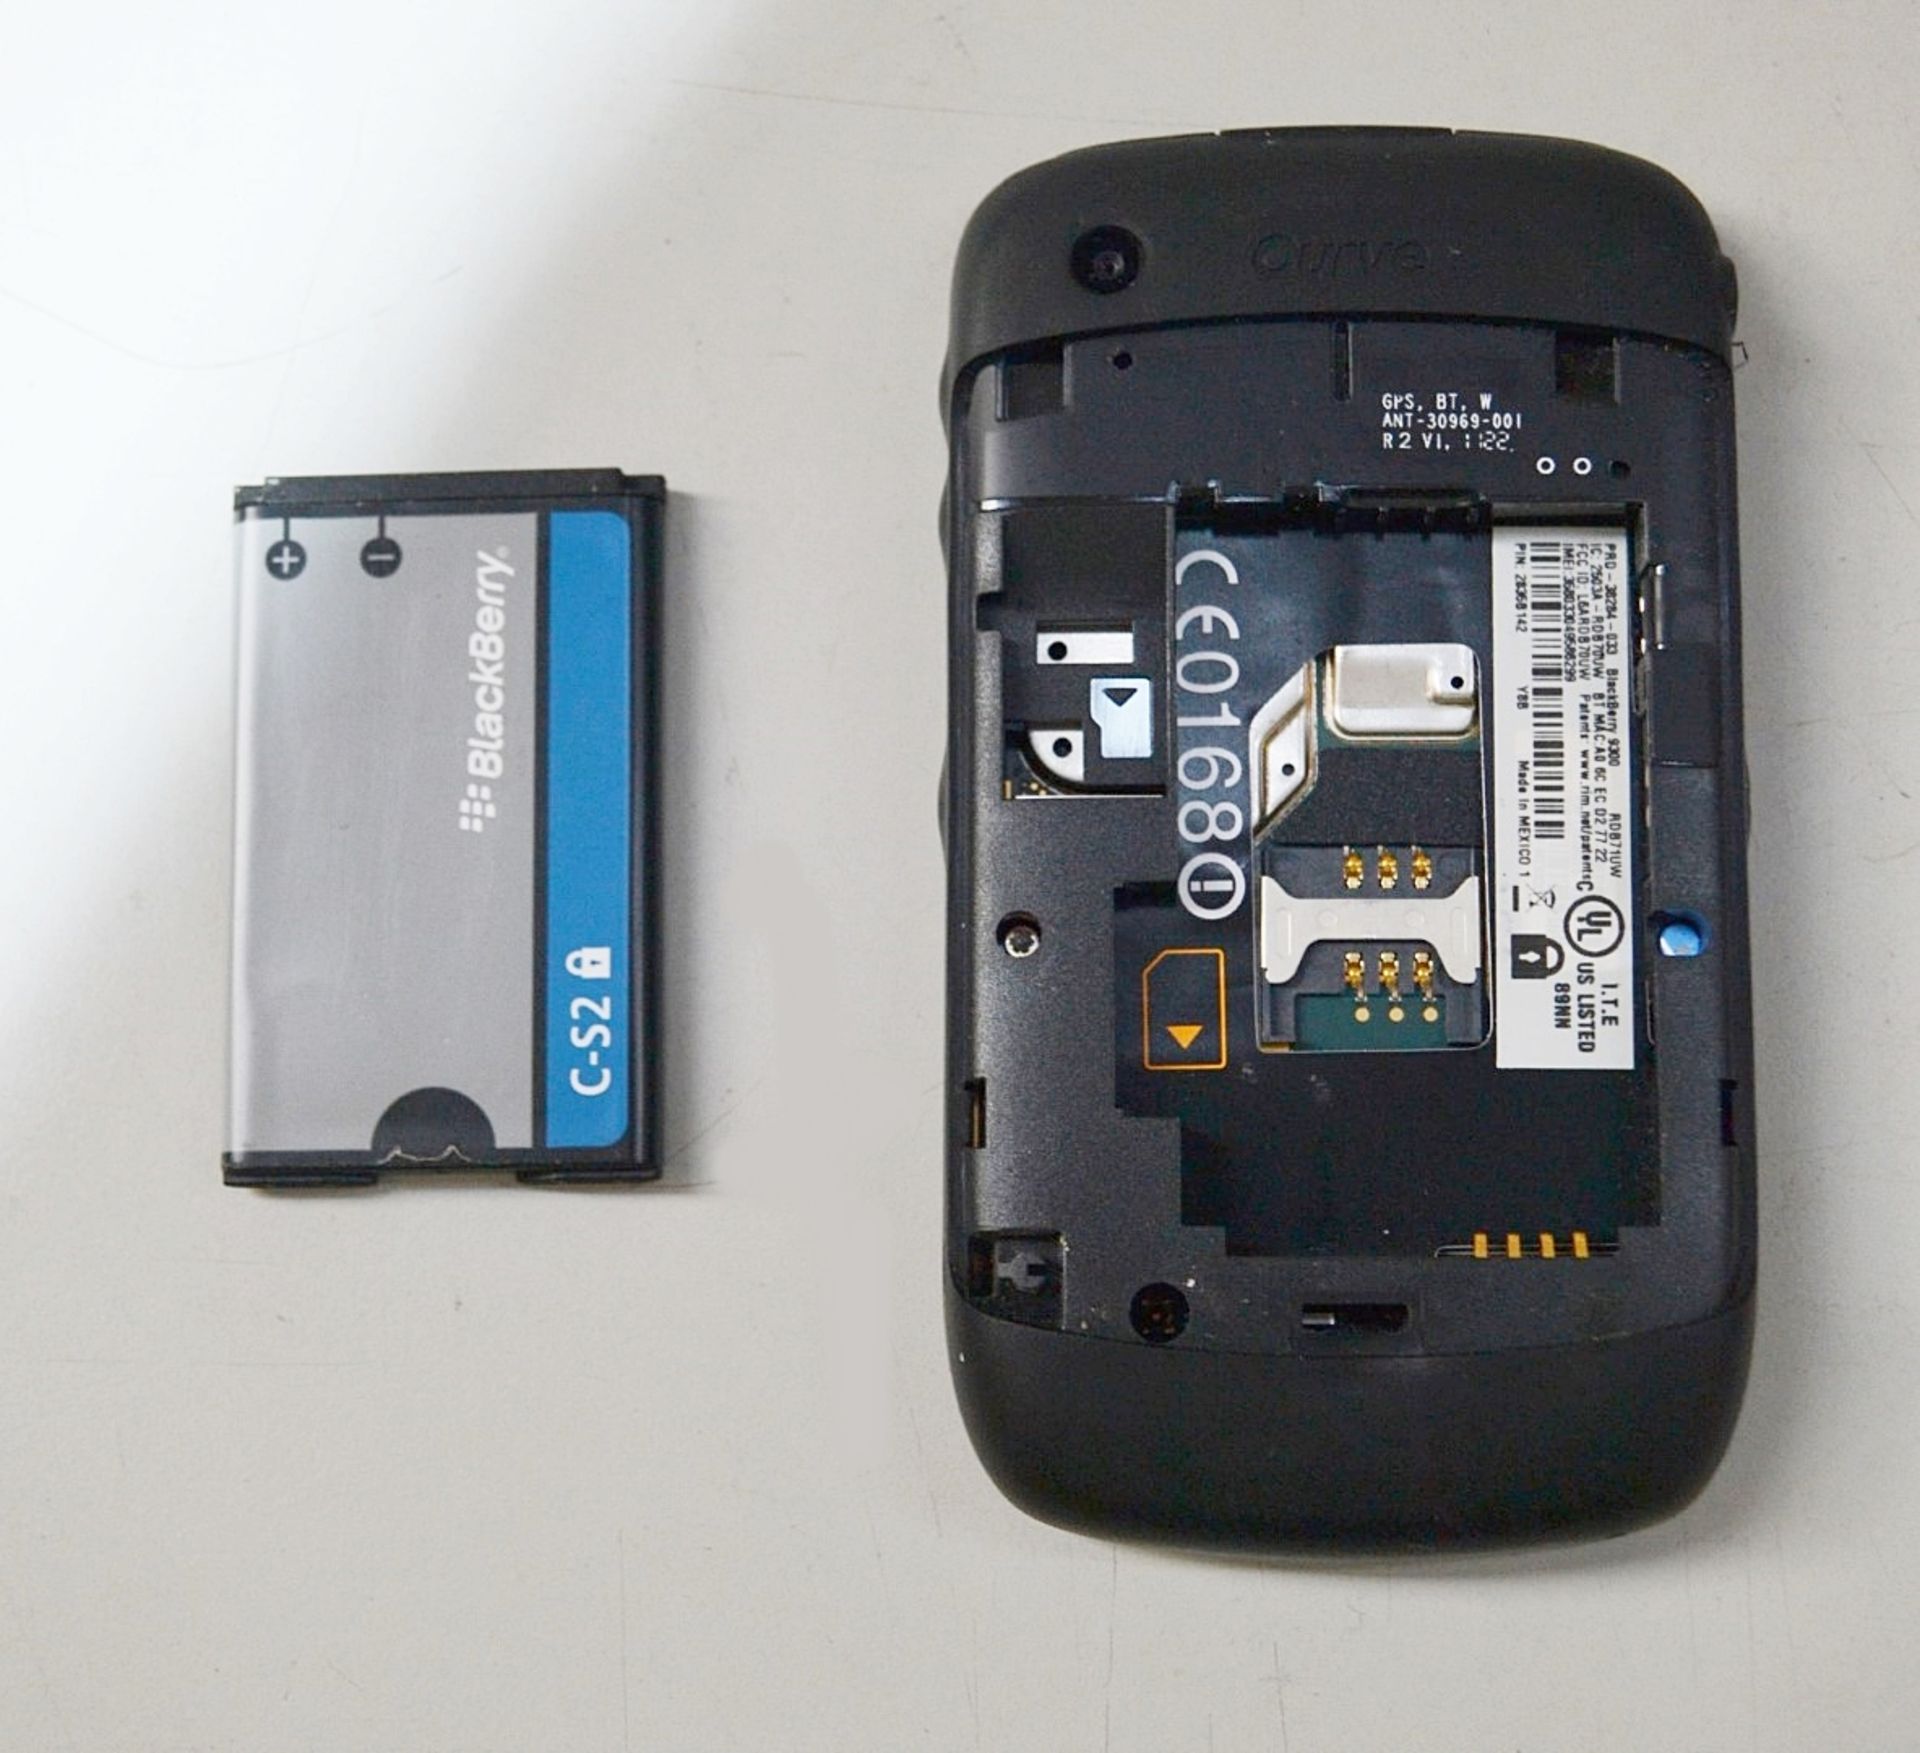 39 x Sim Free Blackberry and Samsung Phones - Ref: LD368 - CL409 - Altrincham WA14 - Image 14 of 20